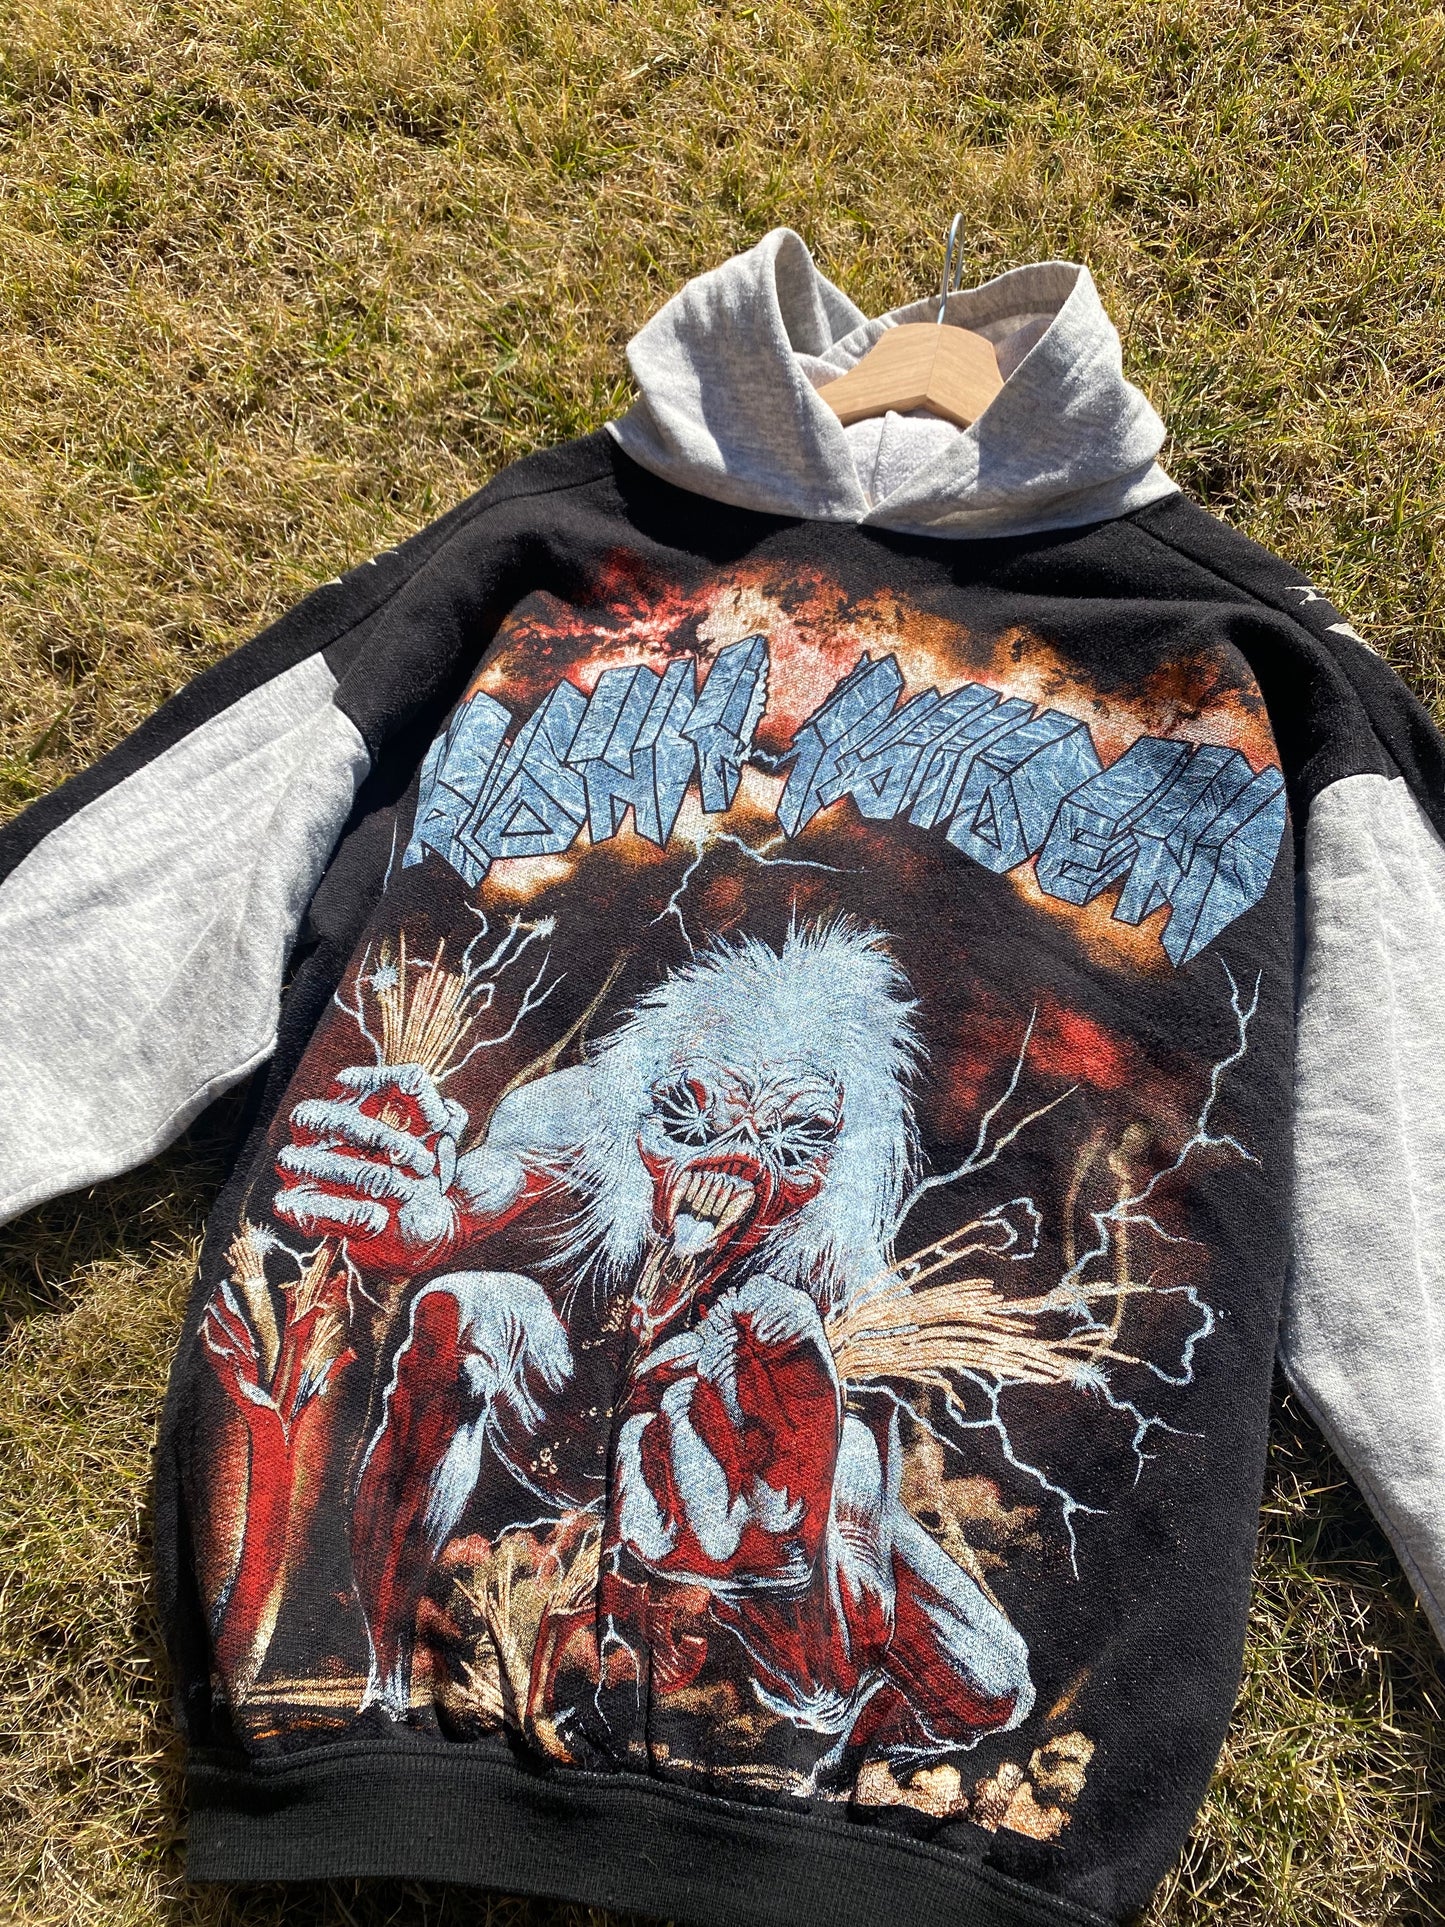 Vintage Iron Maiden 1993 tour hoodie - size L